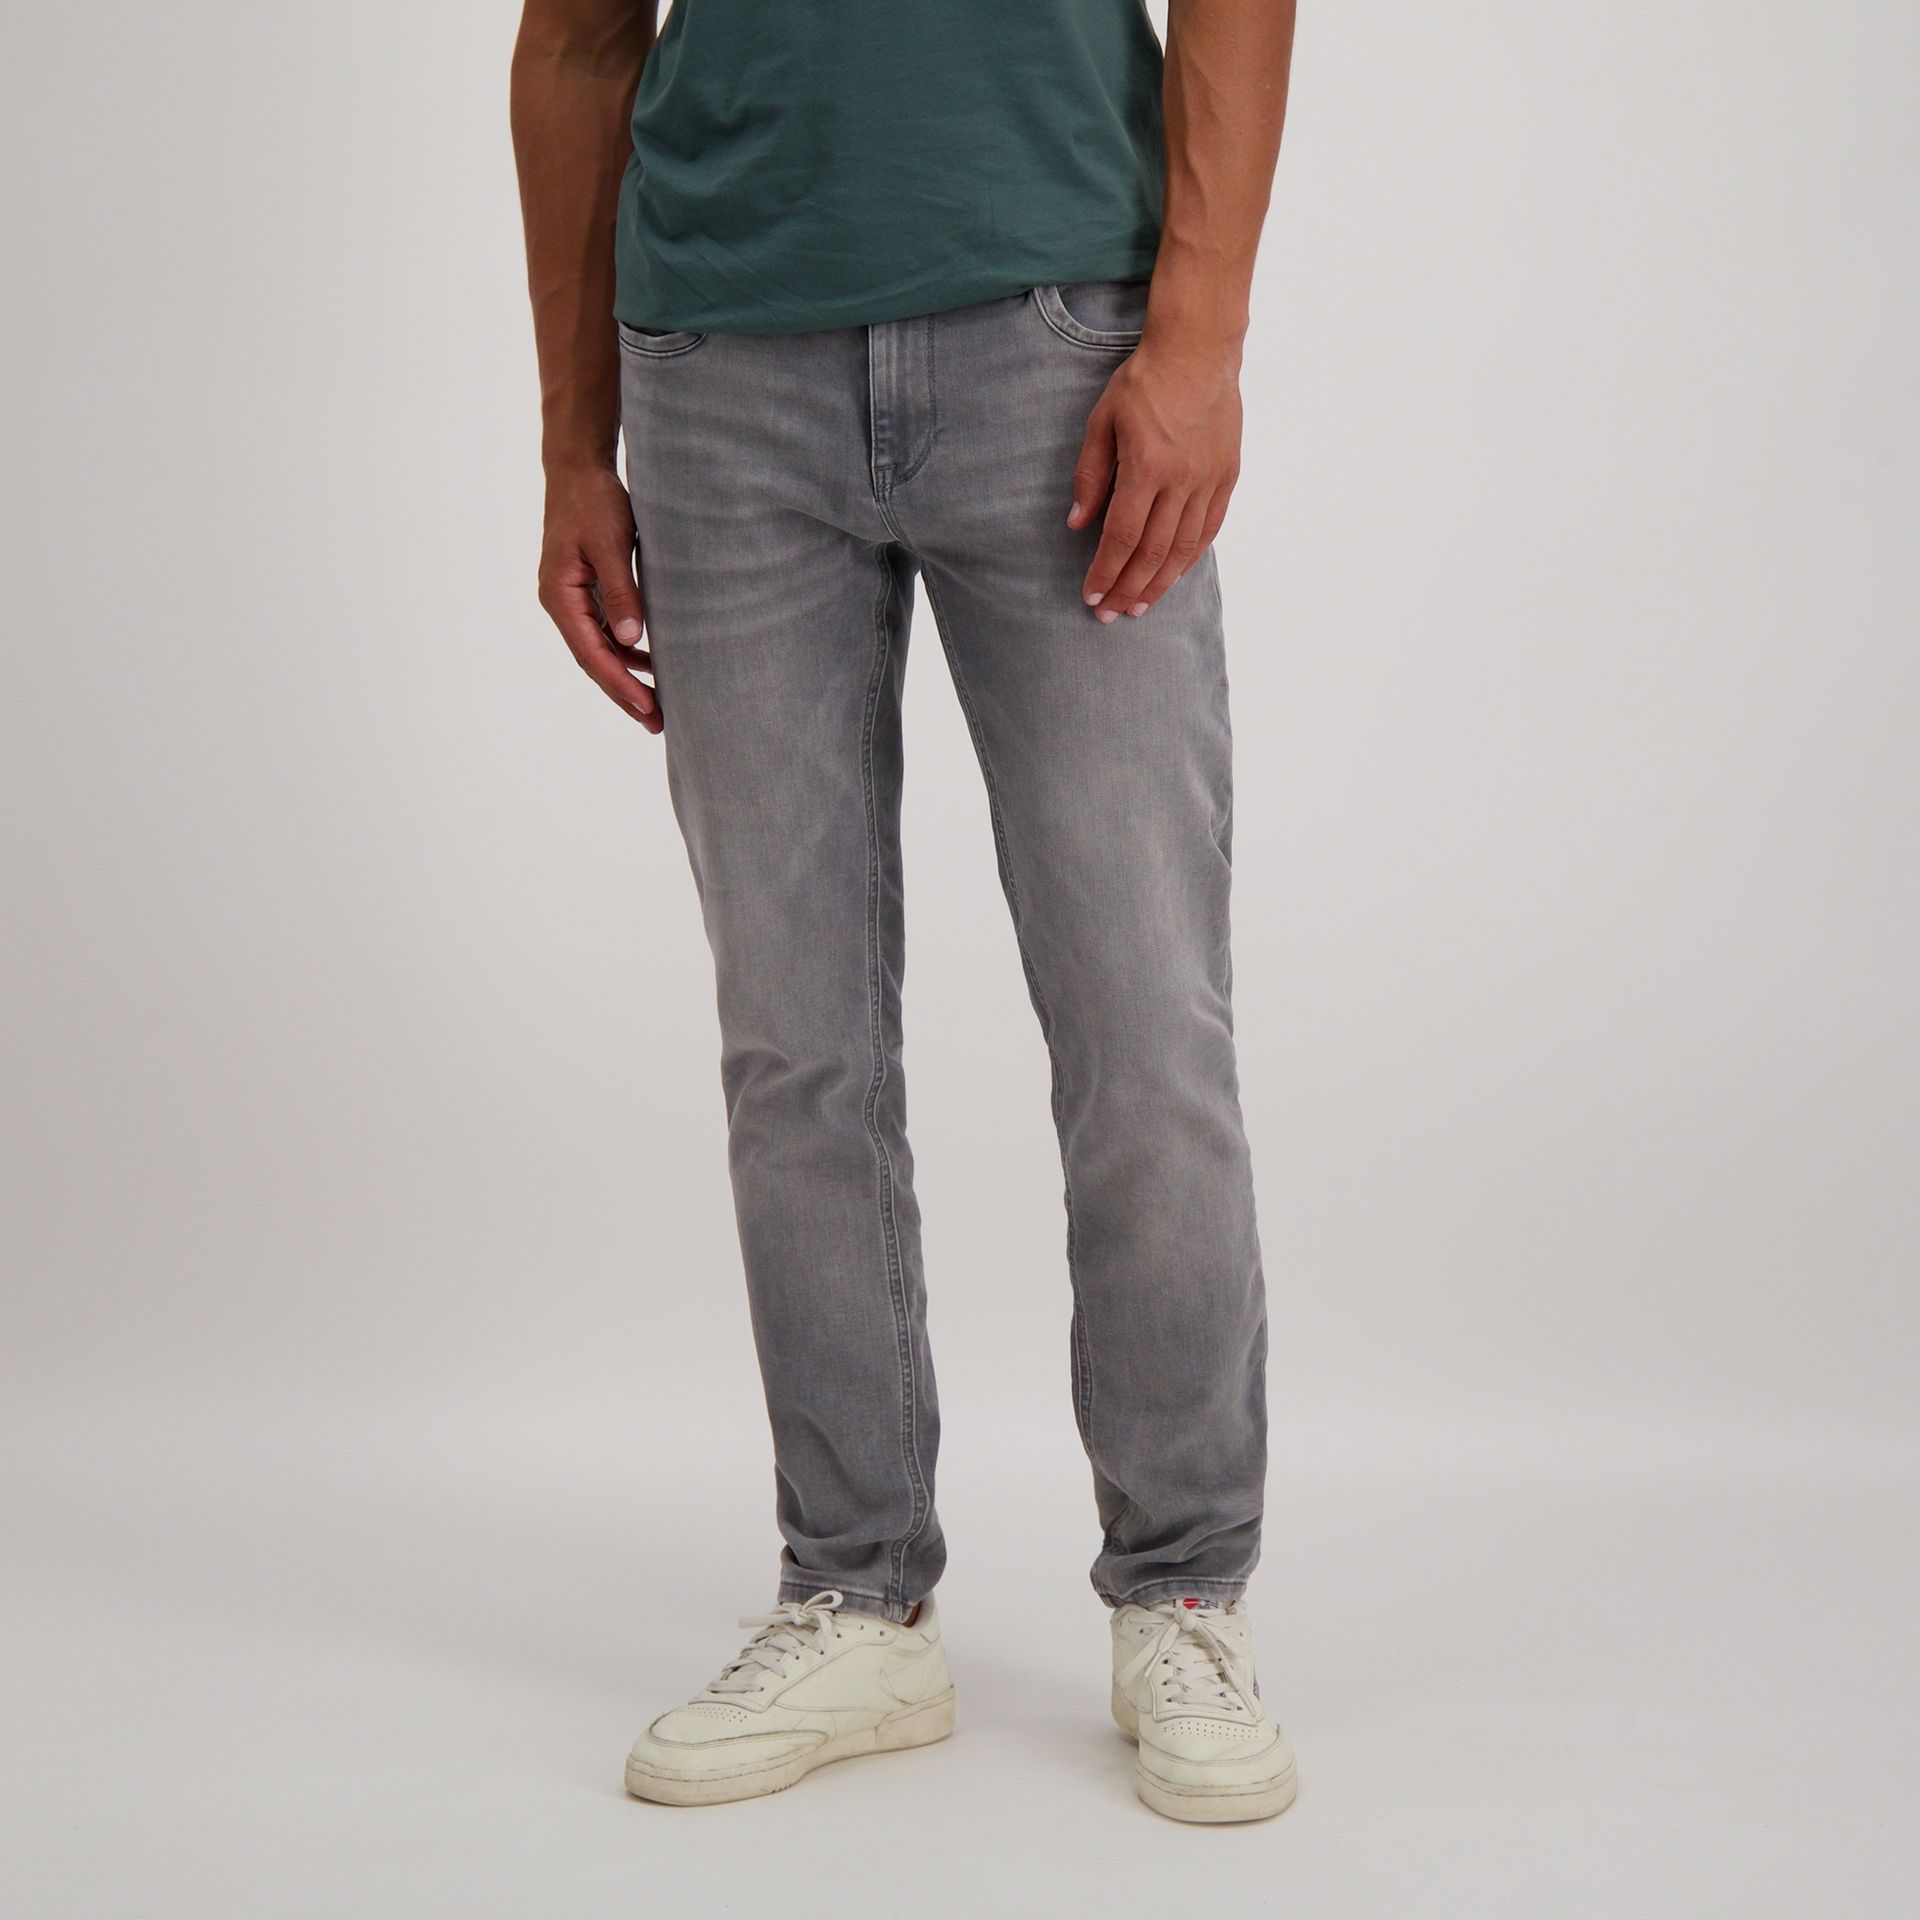 Cars jeans Jeans Blast Jog Slim Fit 13 grey used 00102504-EKA03000200000012